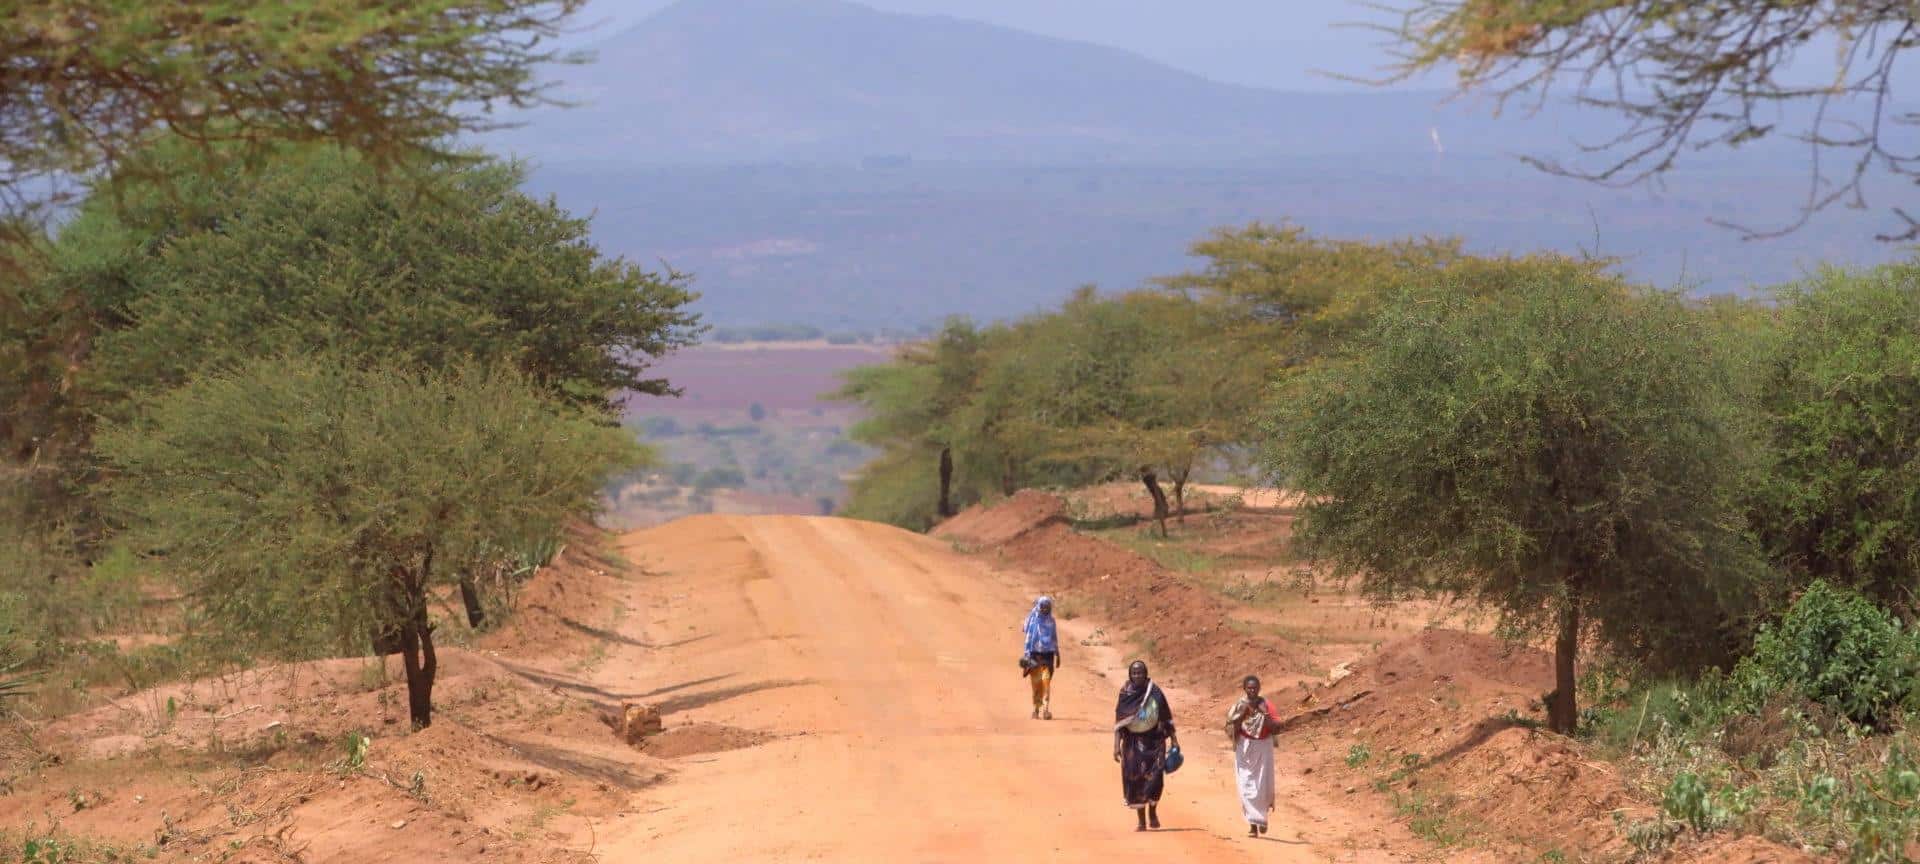 Three women walk along a dirt road in Ethiopia